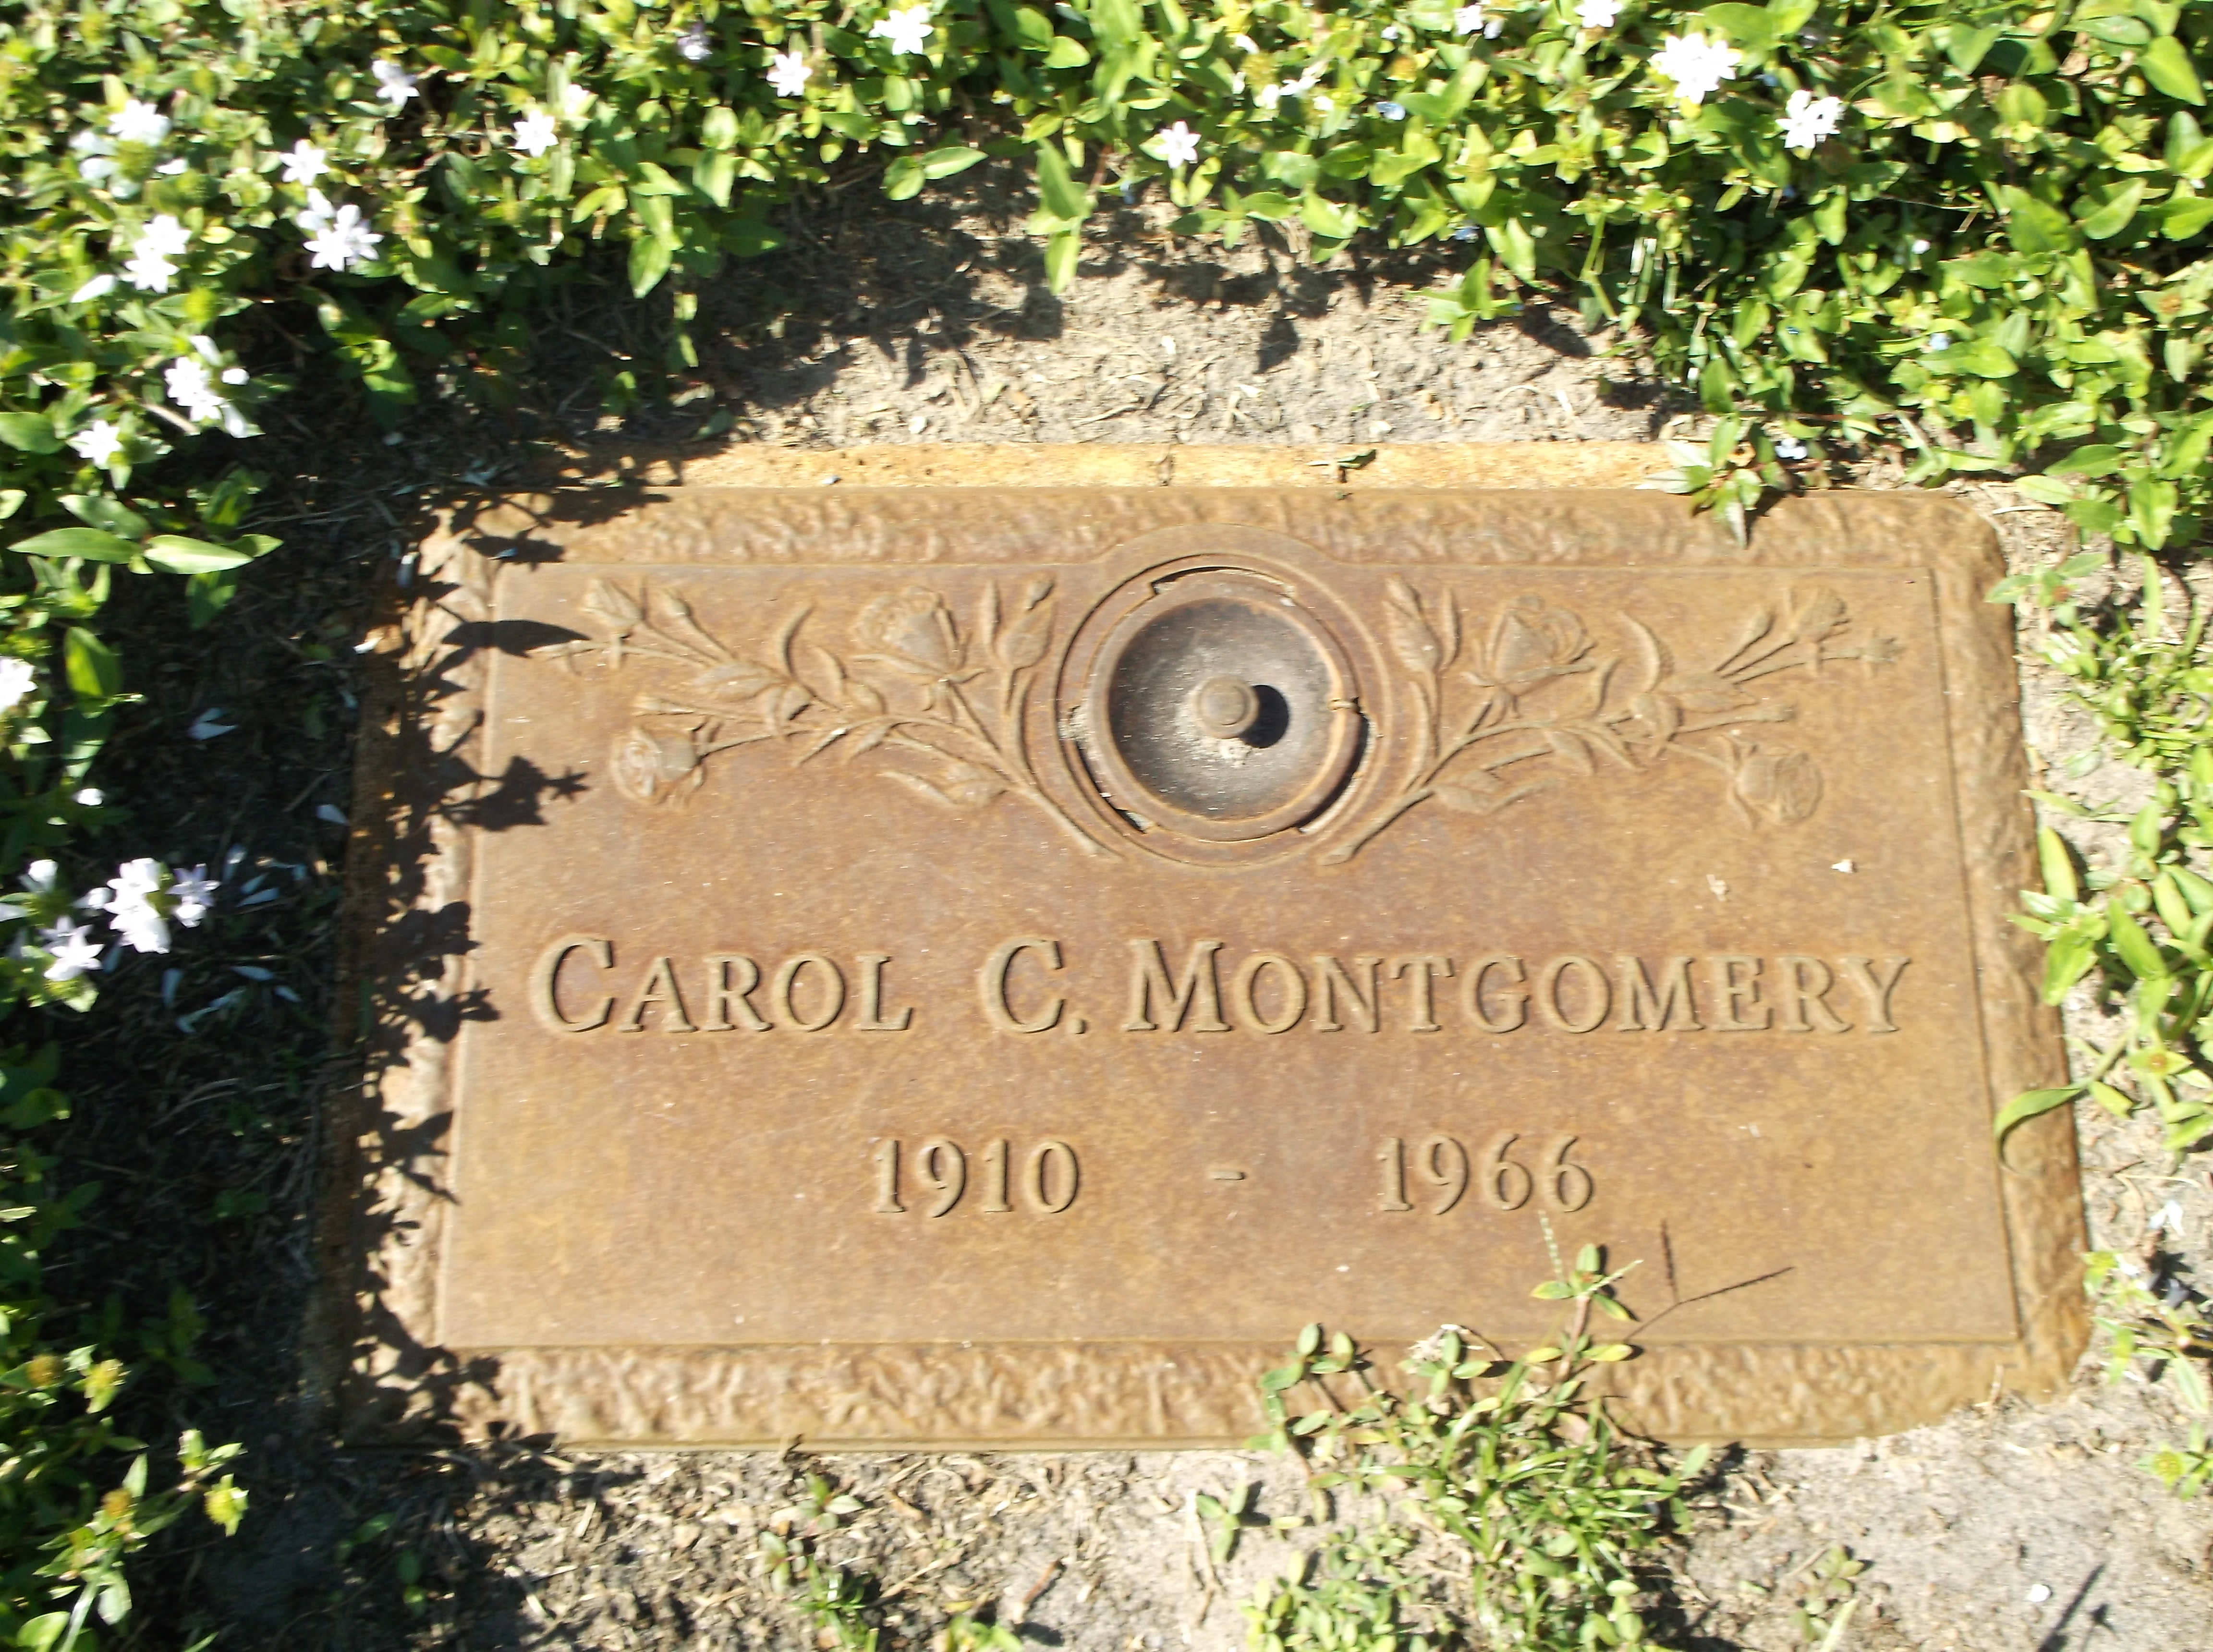 Carol C Montgomery